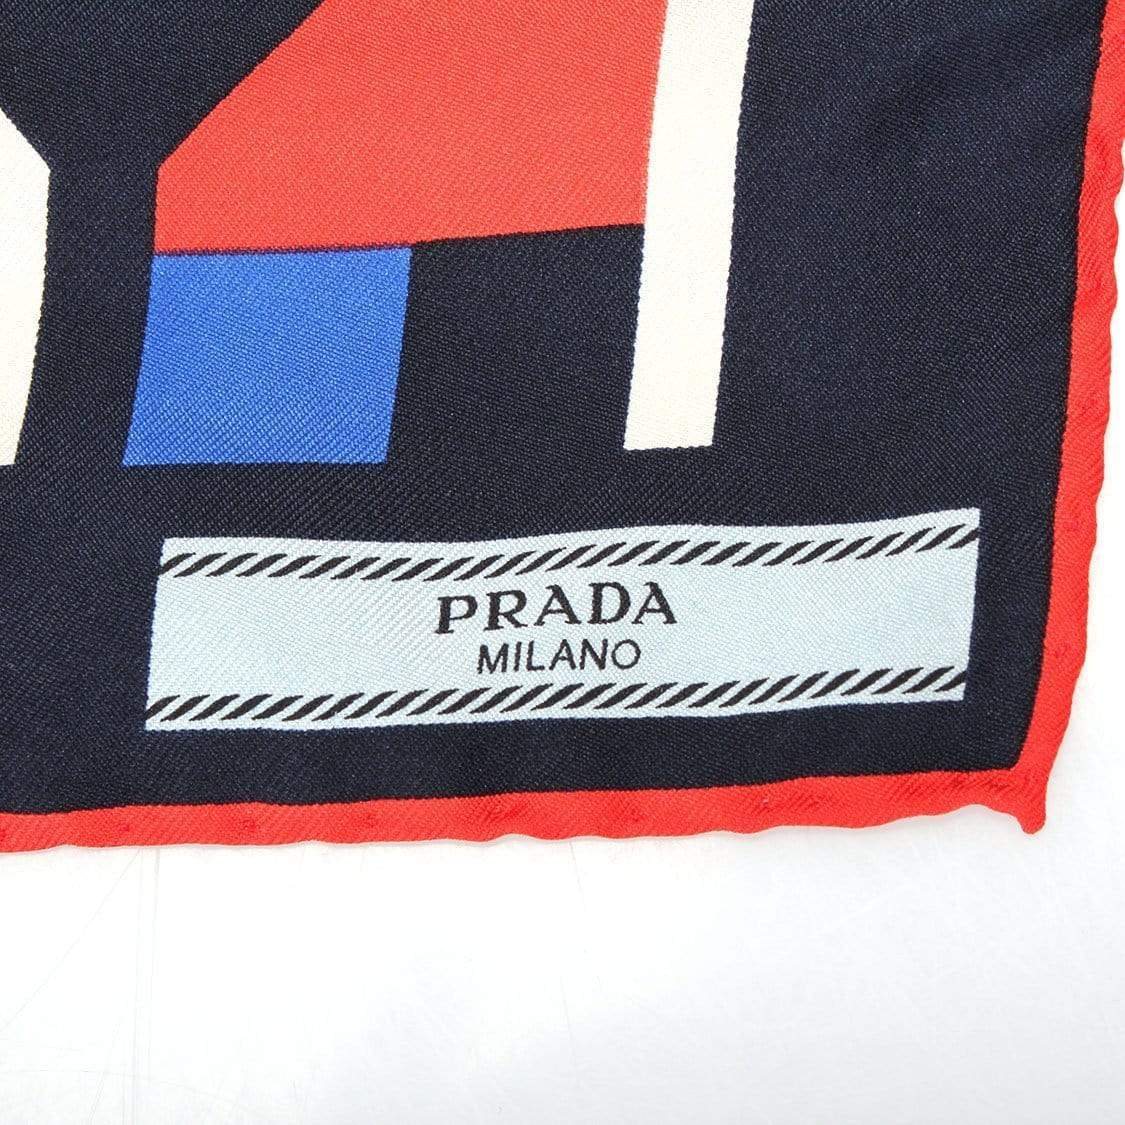 Prada Prada Printed Silk Scarf